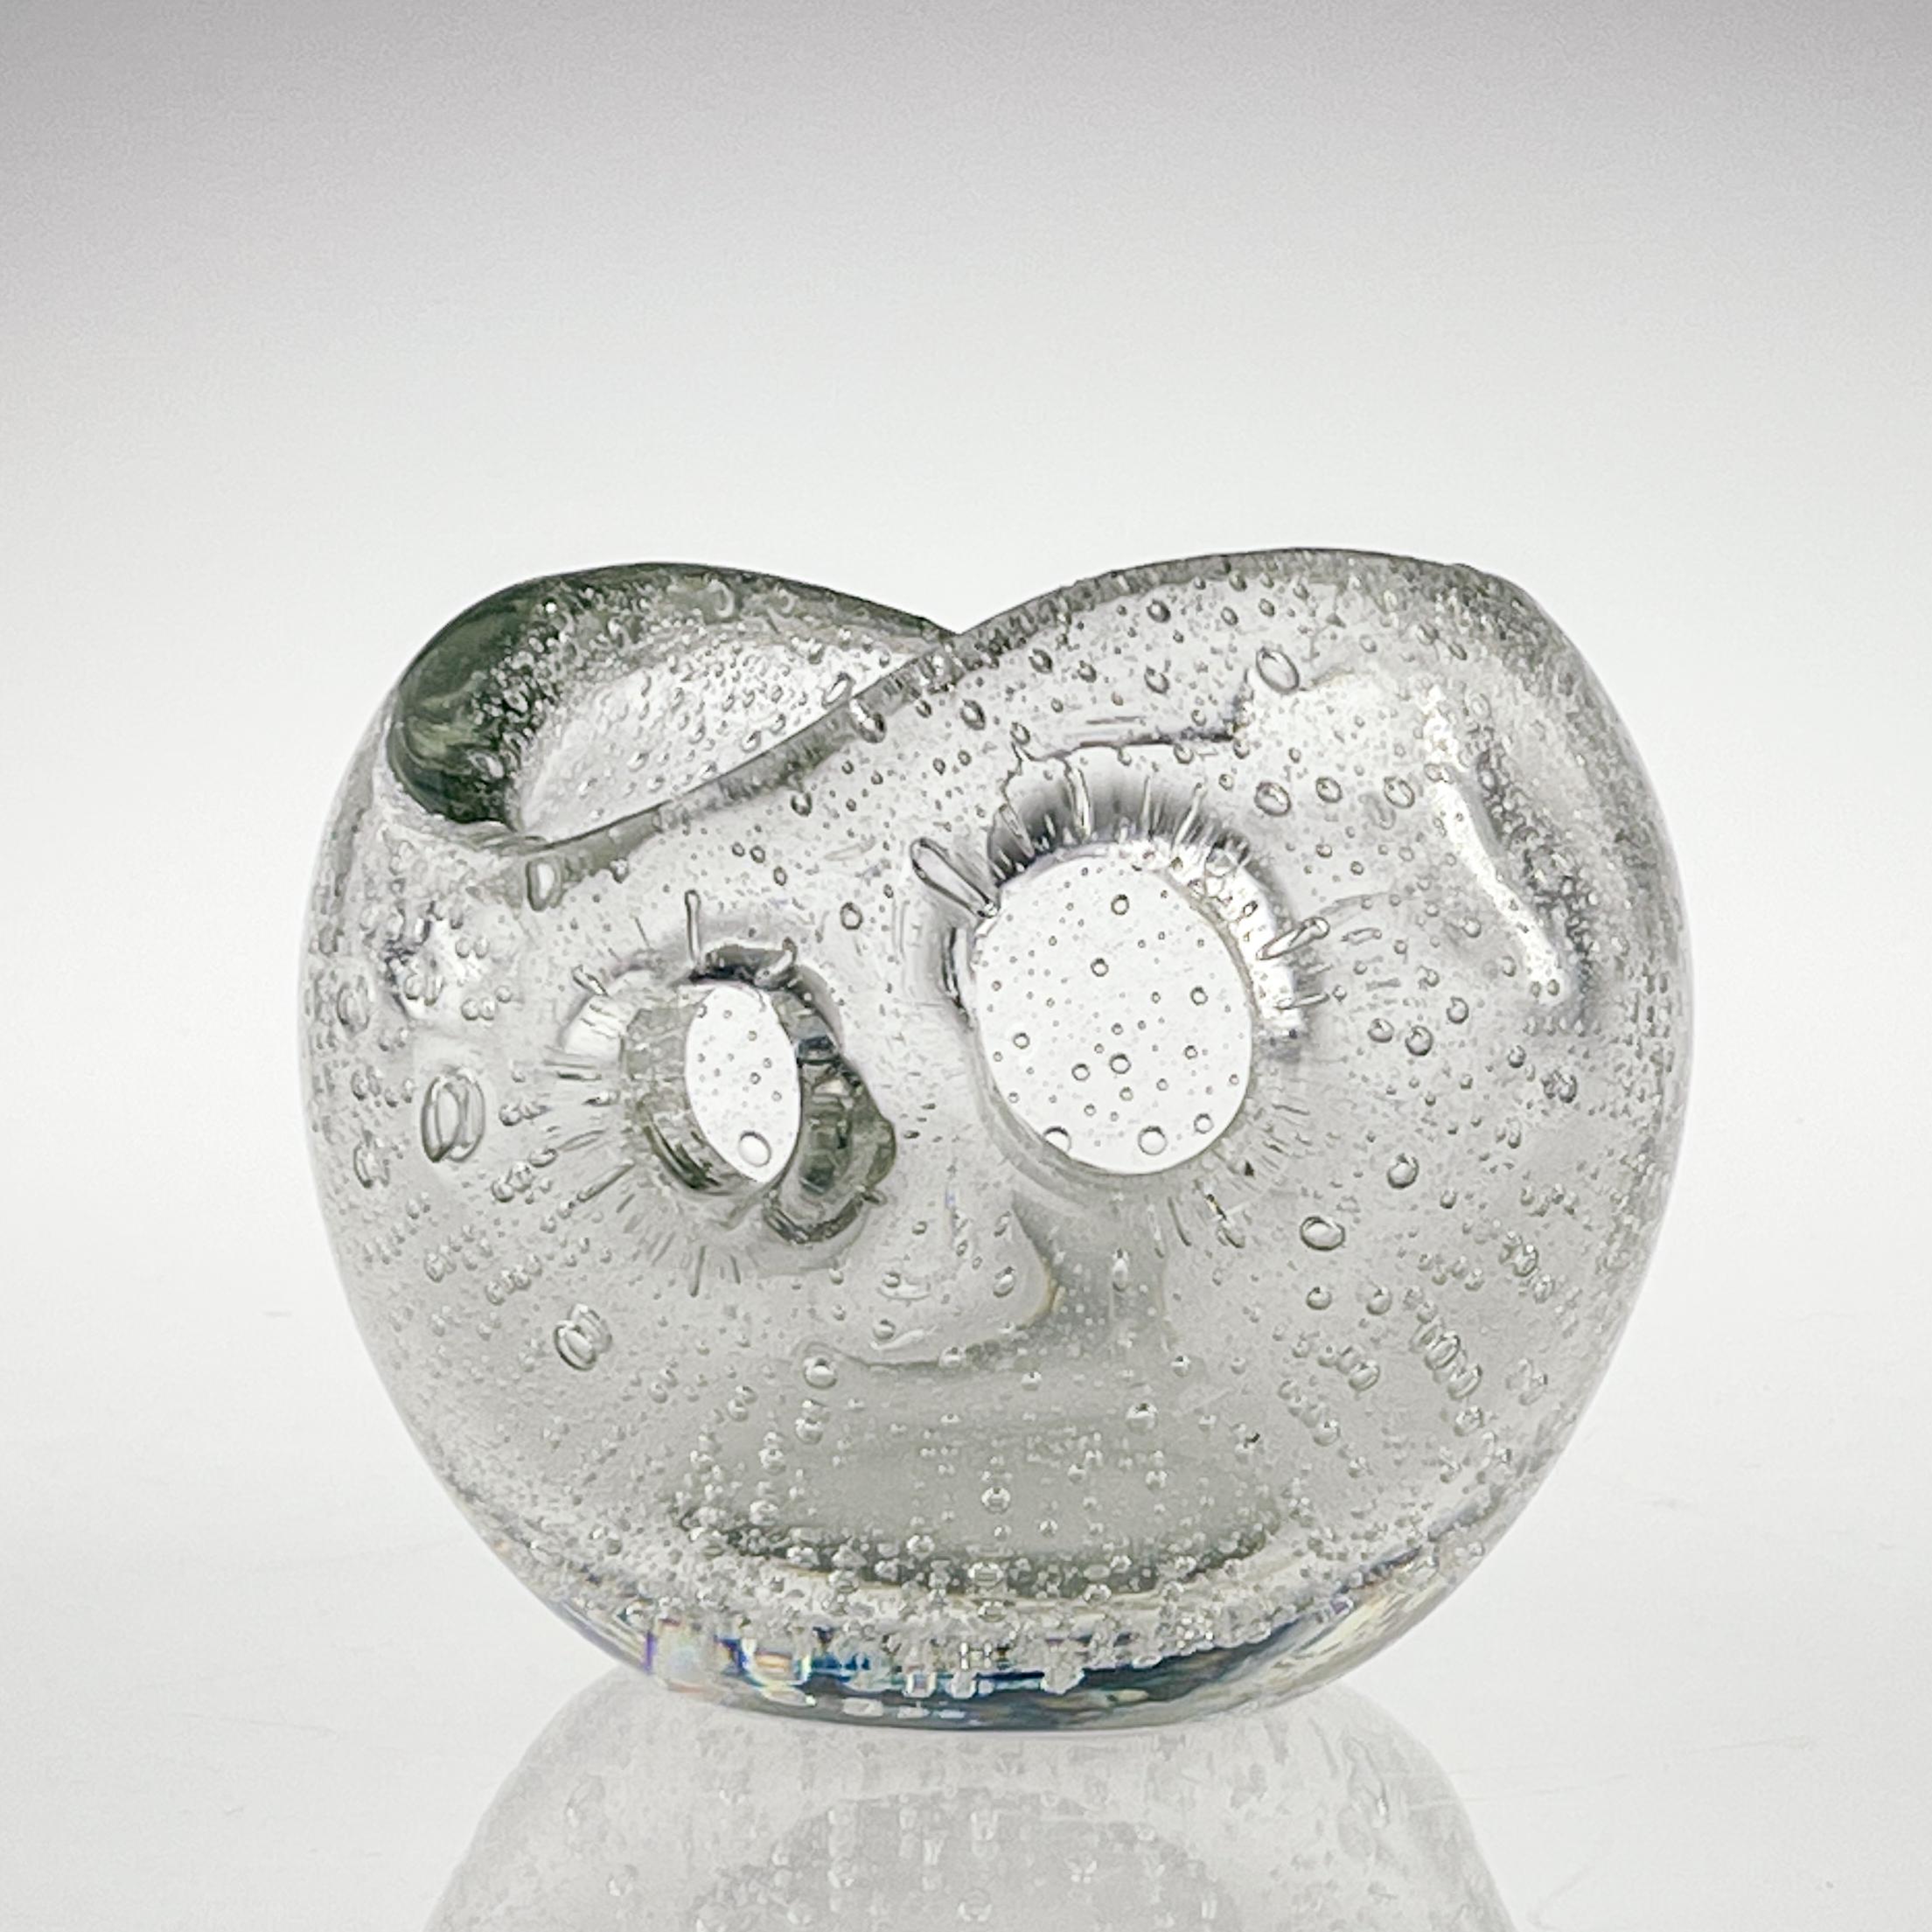 Scandinavian Modern Timo Sarpaneva Glass Sculpture Devils Pearl Handblown 1956 1